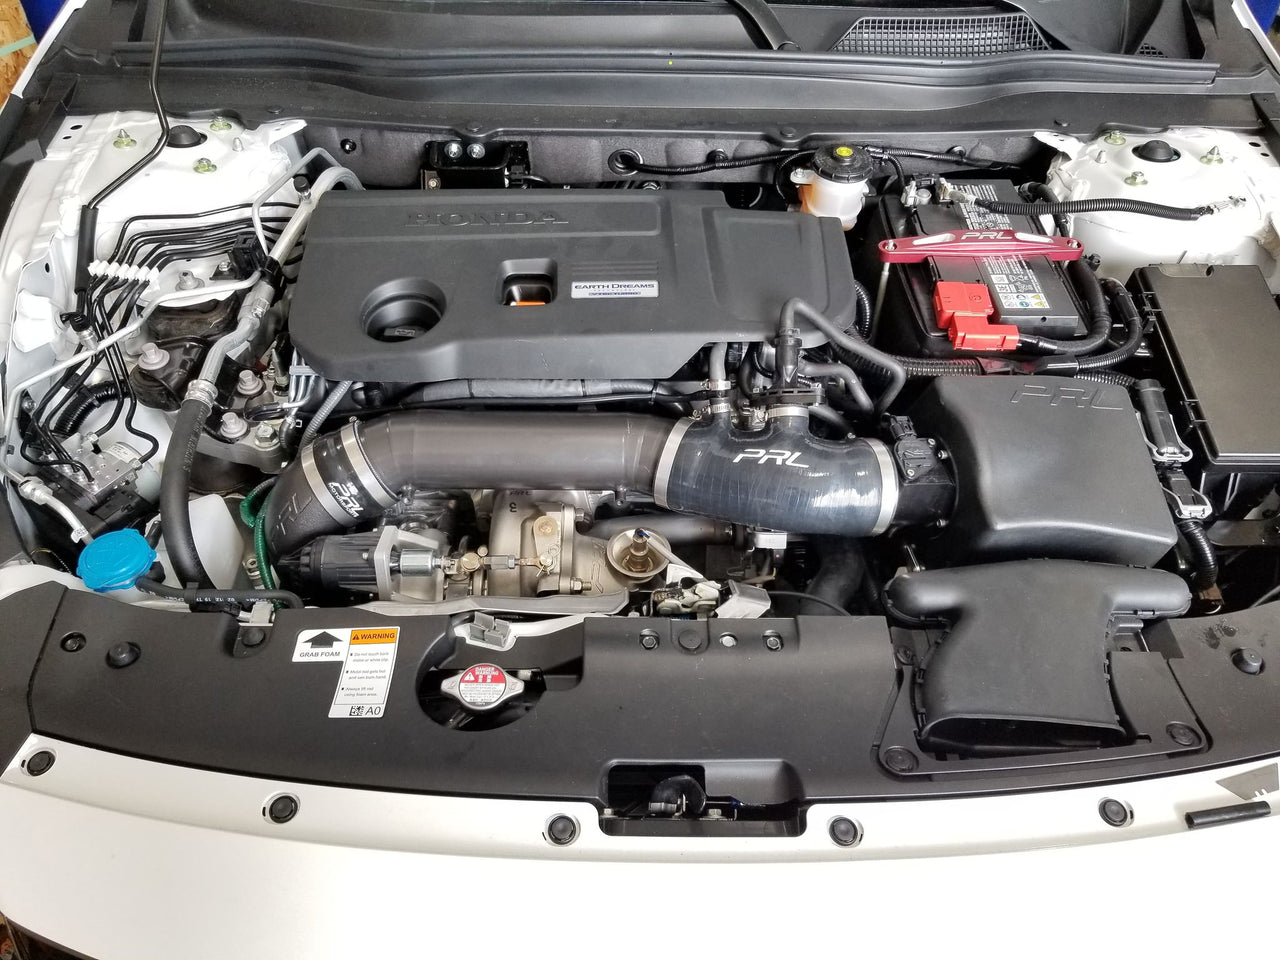 P600 Honda Civic Type-R Drop-In Turbo Development Part 4